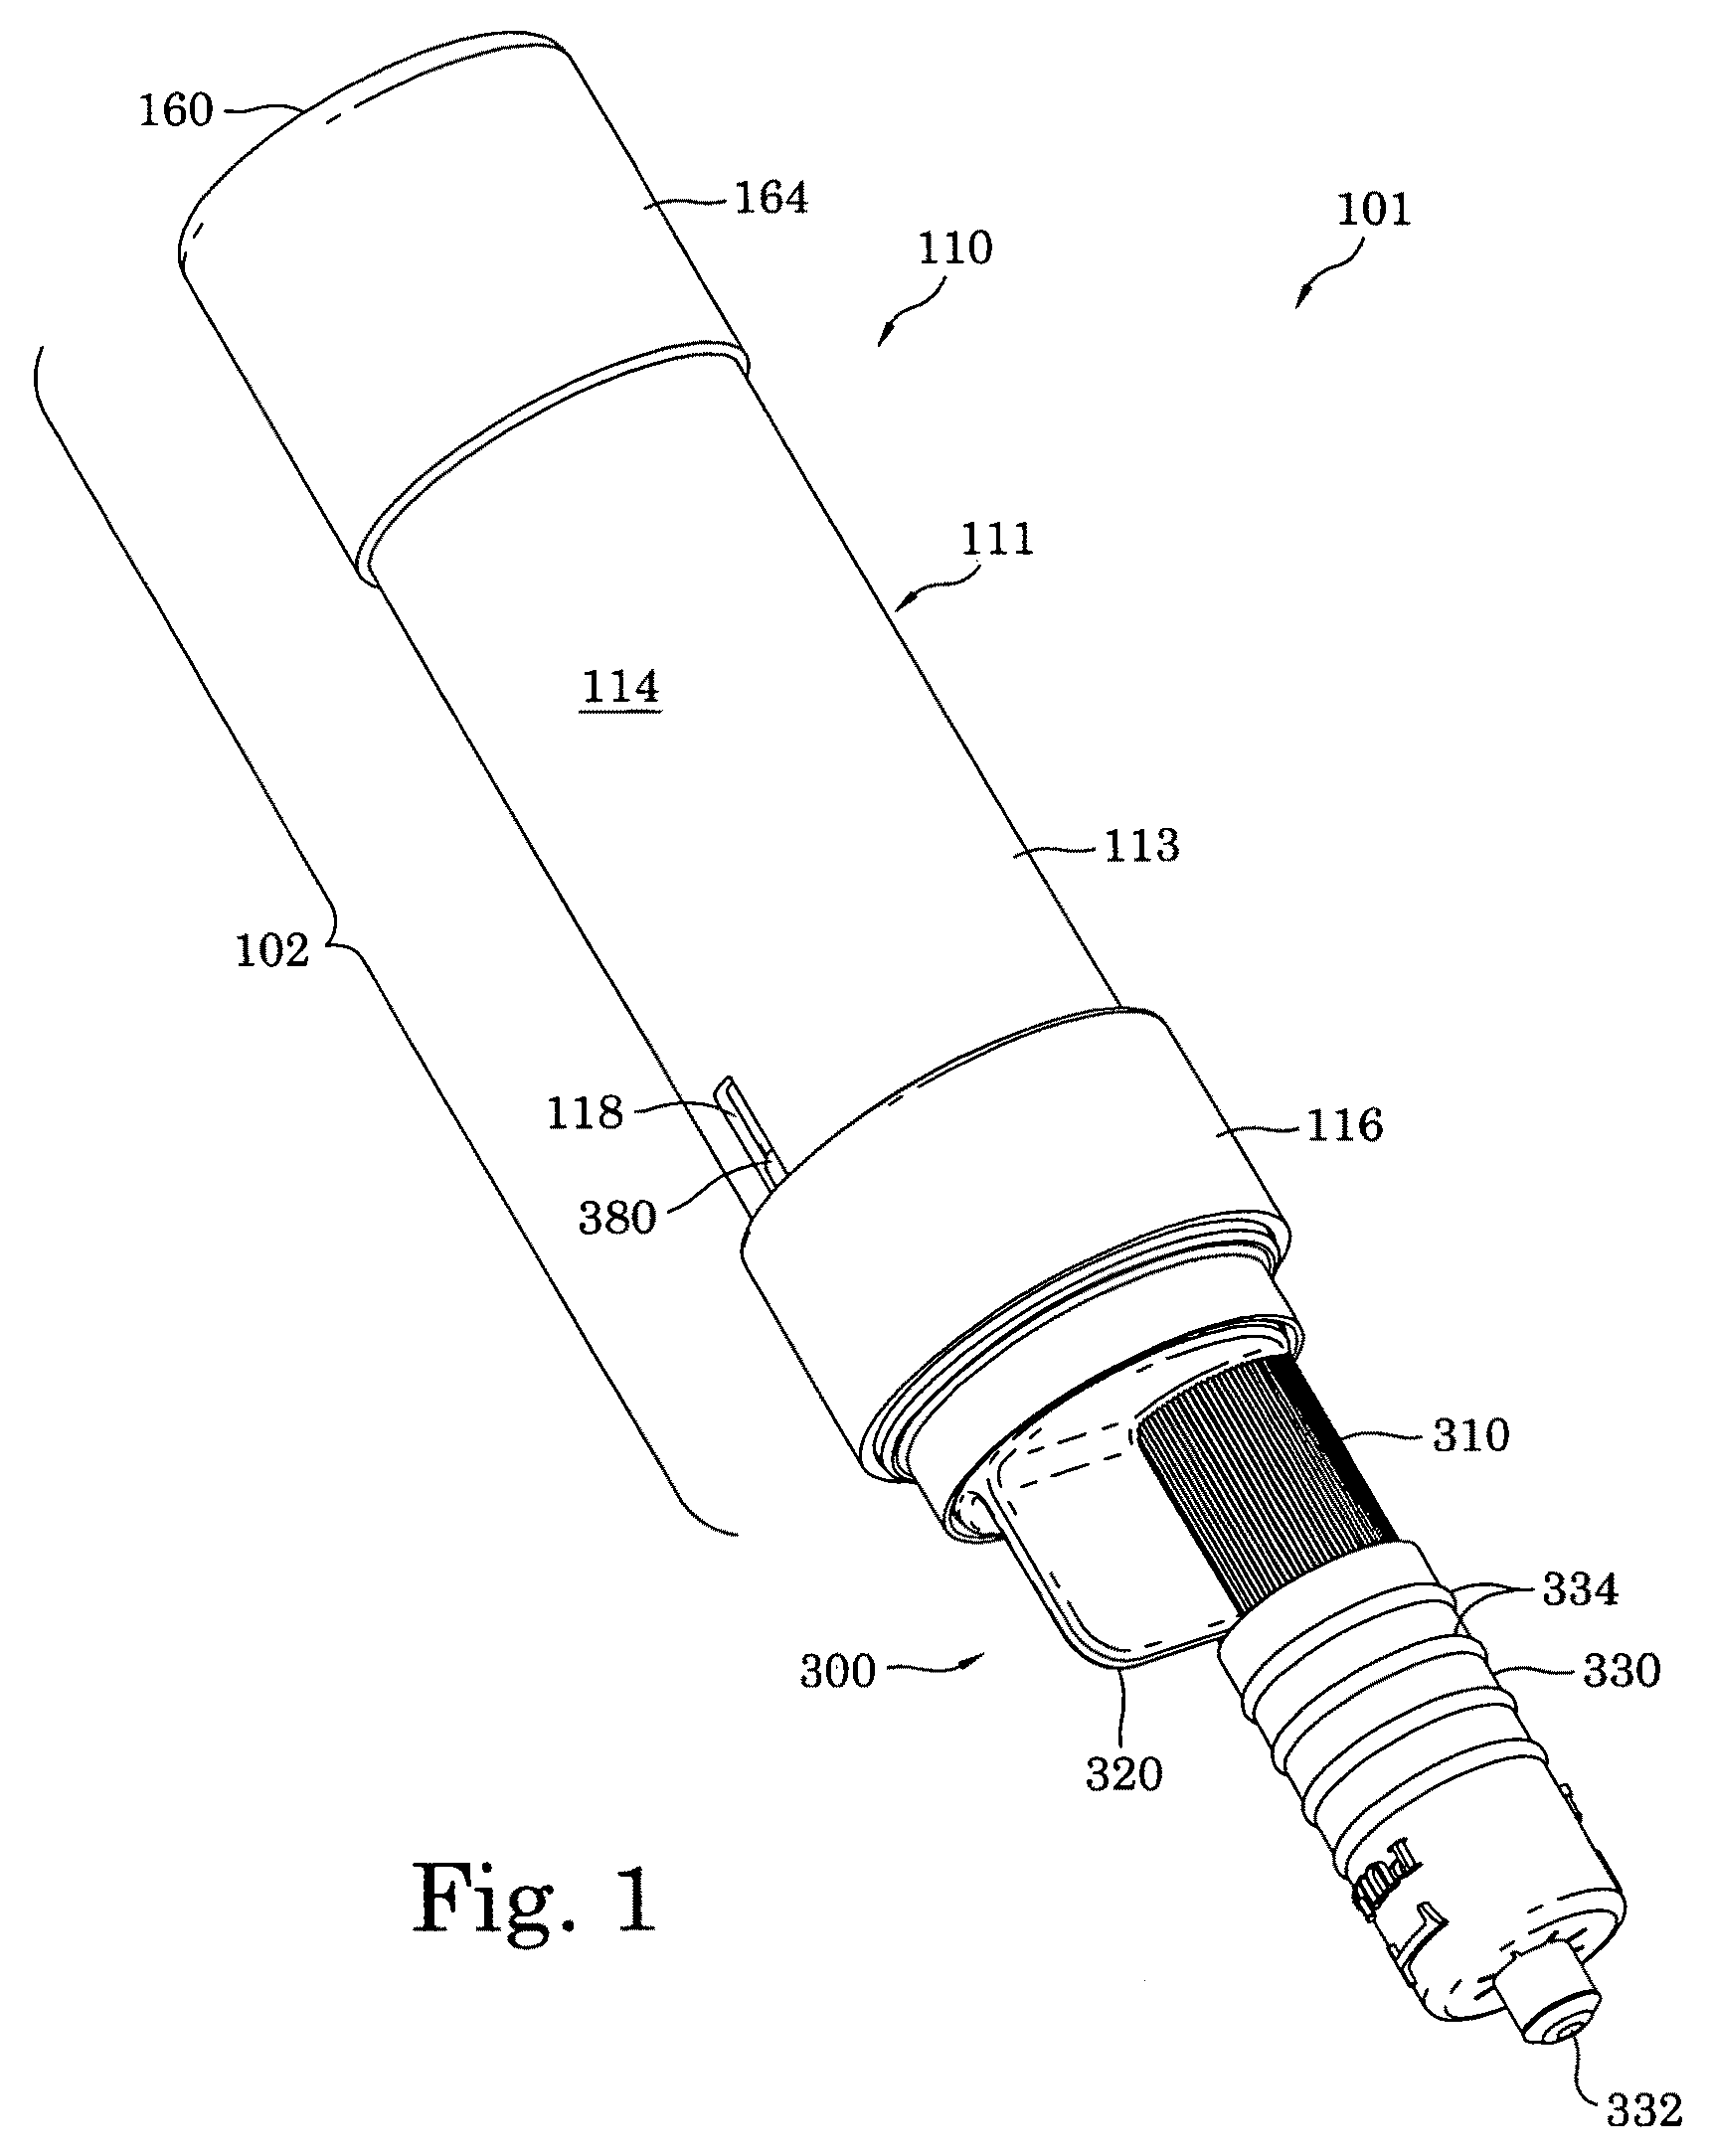 Medicine injection apparatuses